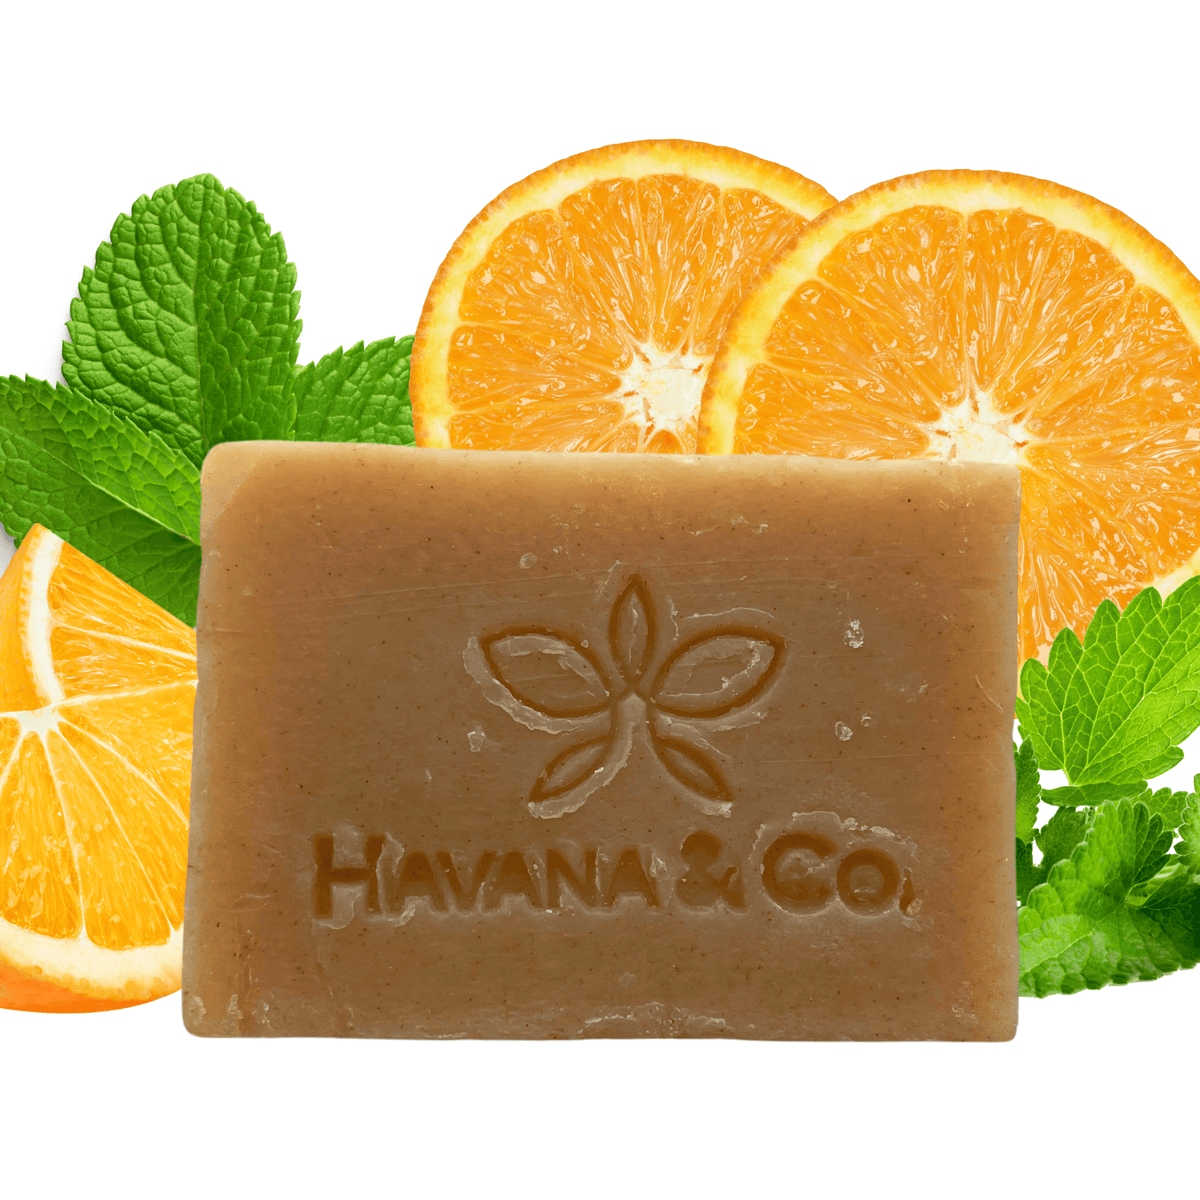 Citrus Orange Zest Soap - Savvy Naturalista